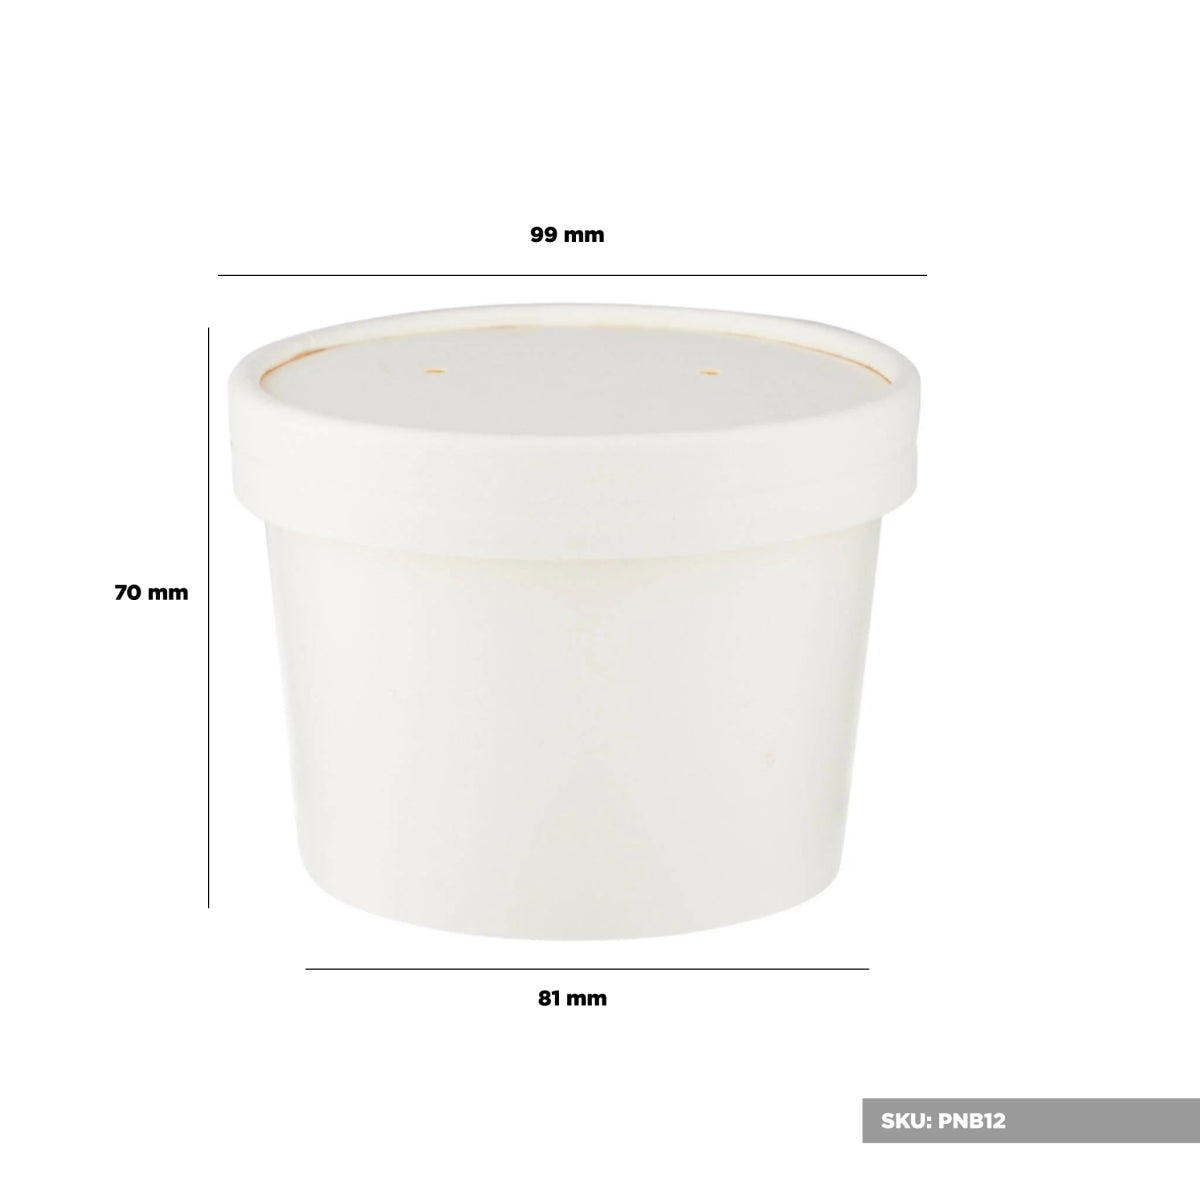 White Paper Noodle Bowl with Paper Lid - hotpackwebstore.com - Noodle Bowls